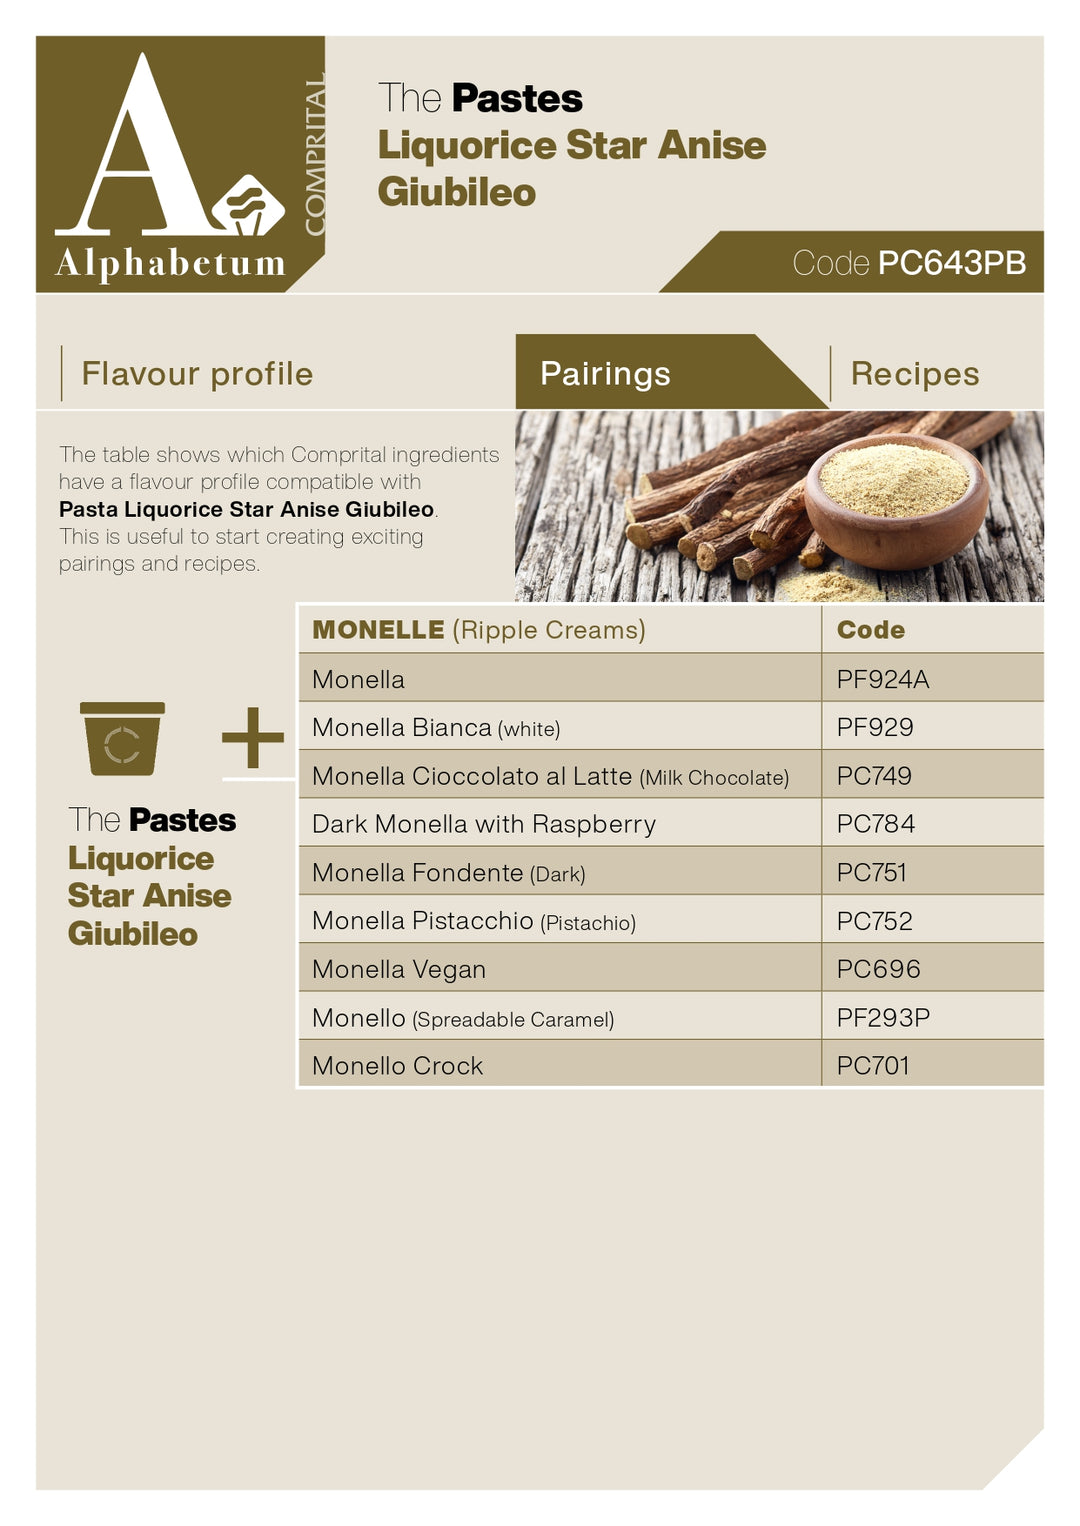 Liquirizia Anice Stellato Giubileo (natural star anise liquorice) Paste - Case of 2 x 2.5 kg Units